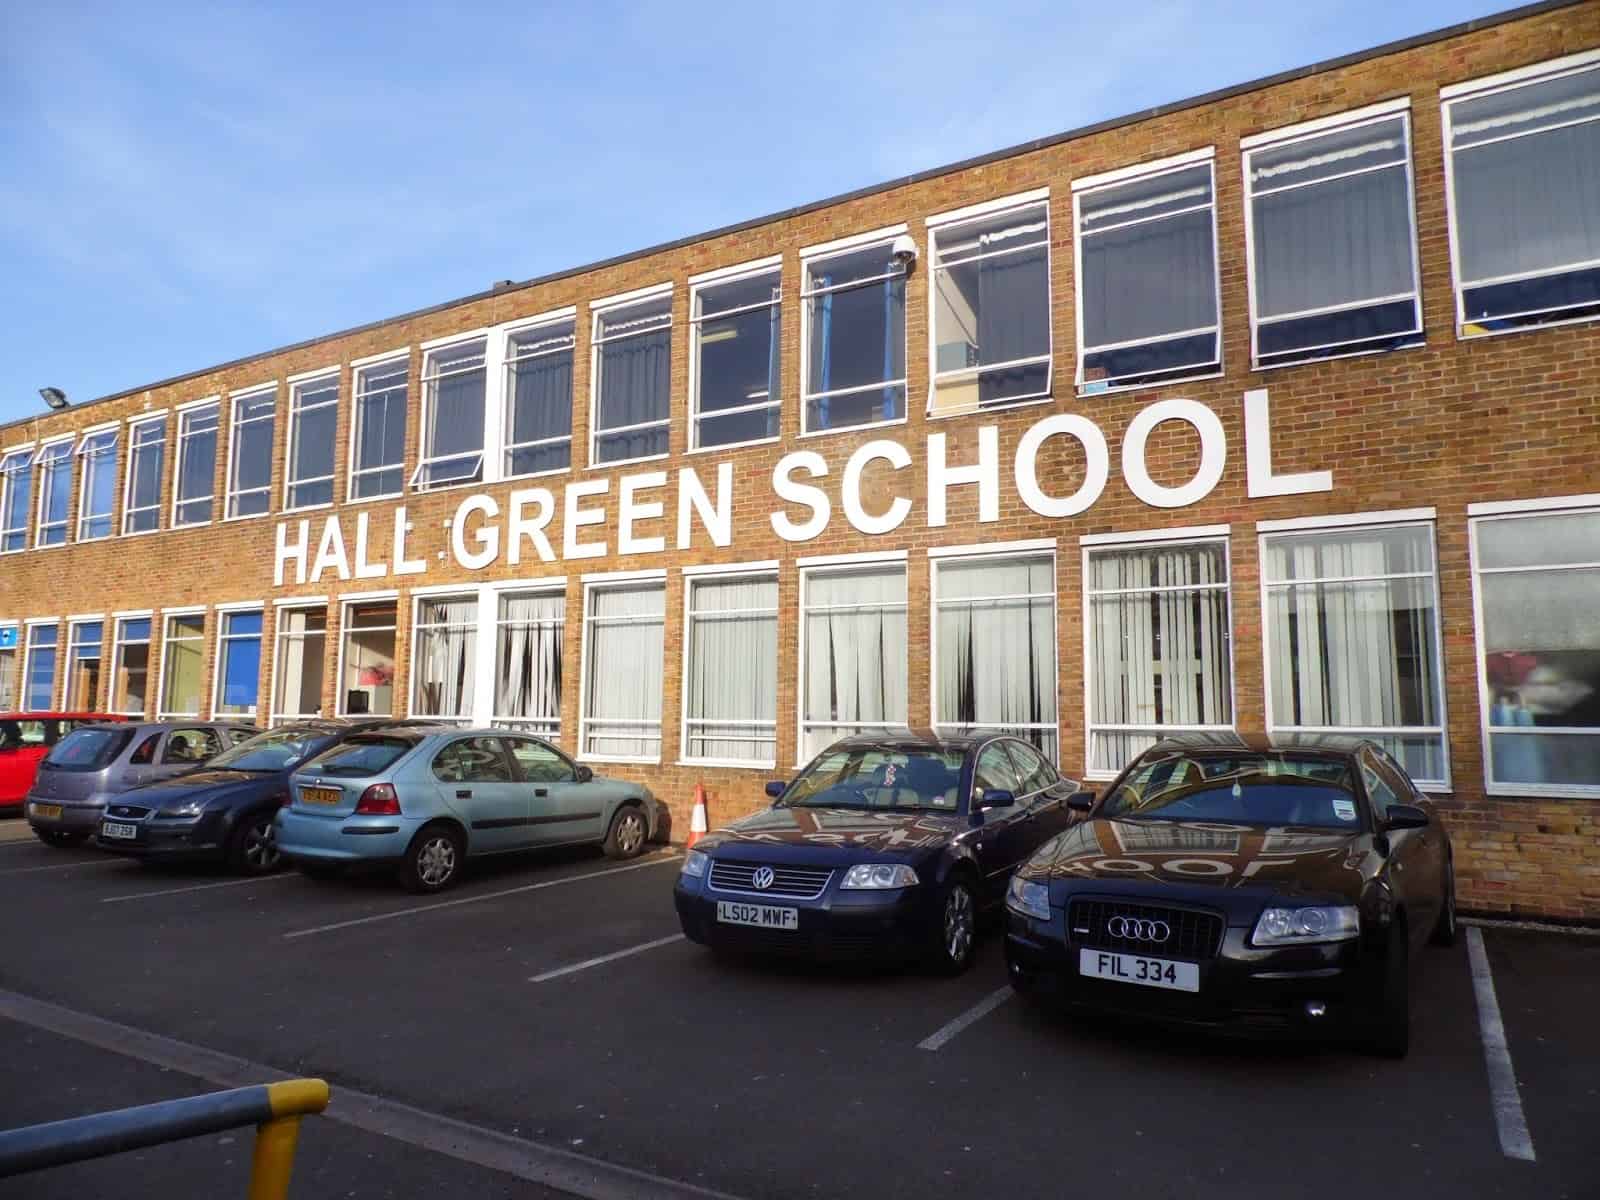 Hall Green School